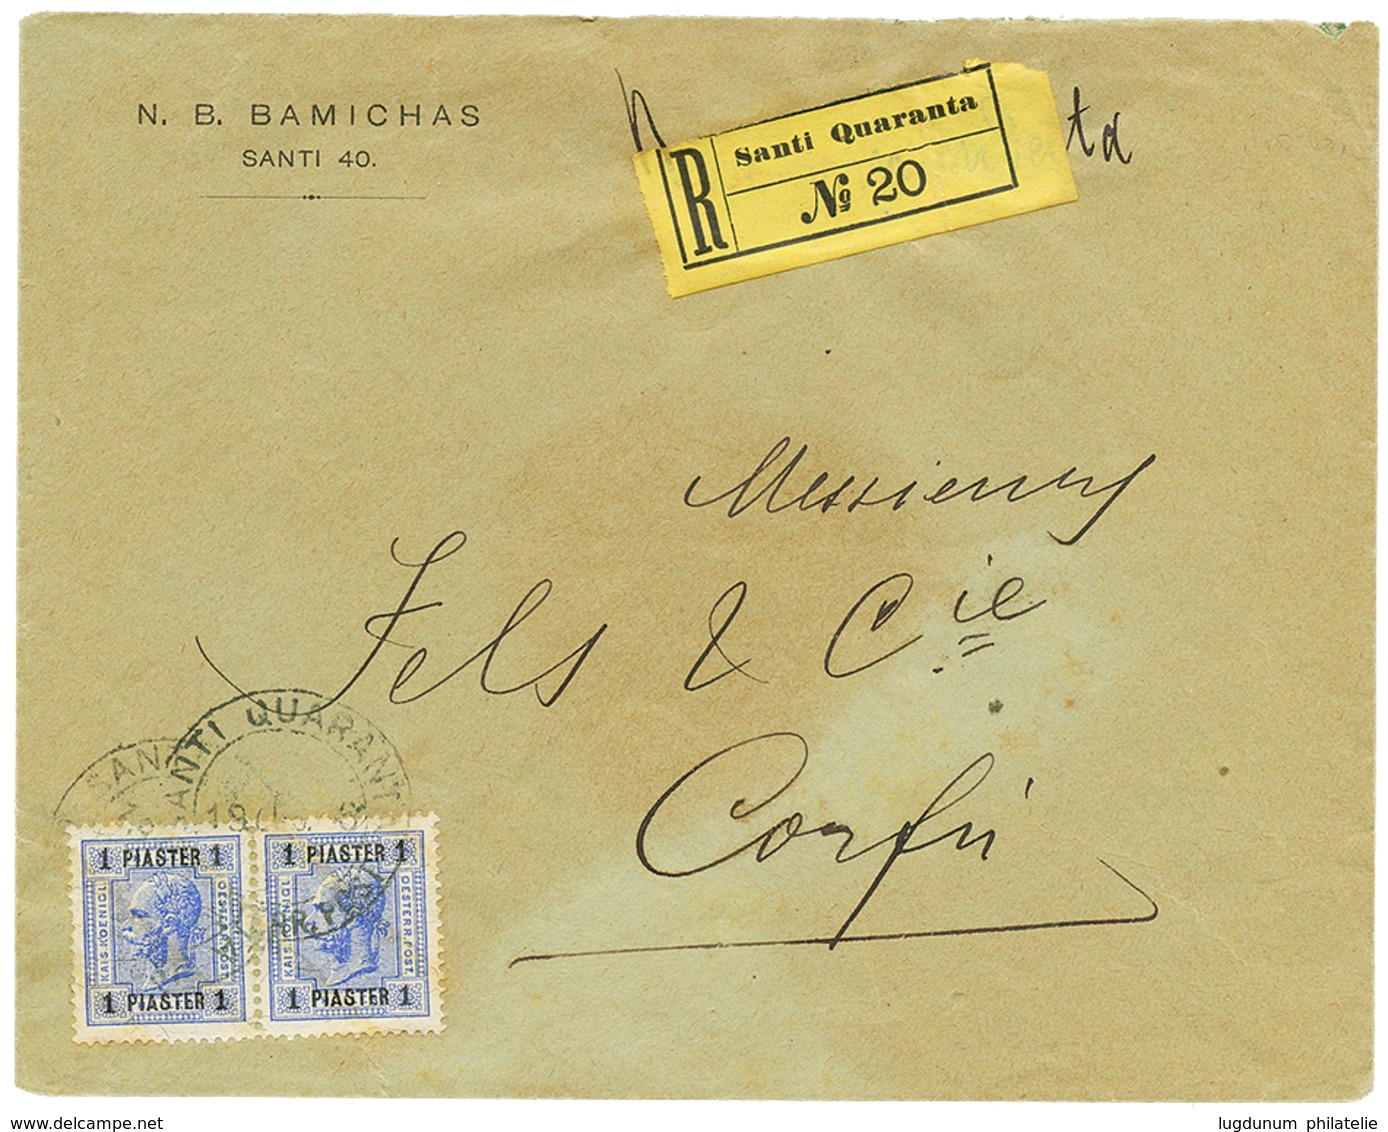 "SANTI QUARANTA" : 1906 1P(x2) Canc. SANTIQUARANTA On REGISTERED Envelope To CORFU. Scarce. Vf. - Levante-Marken